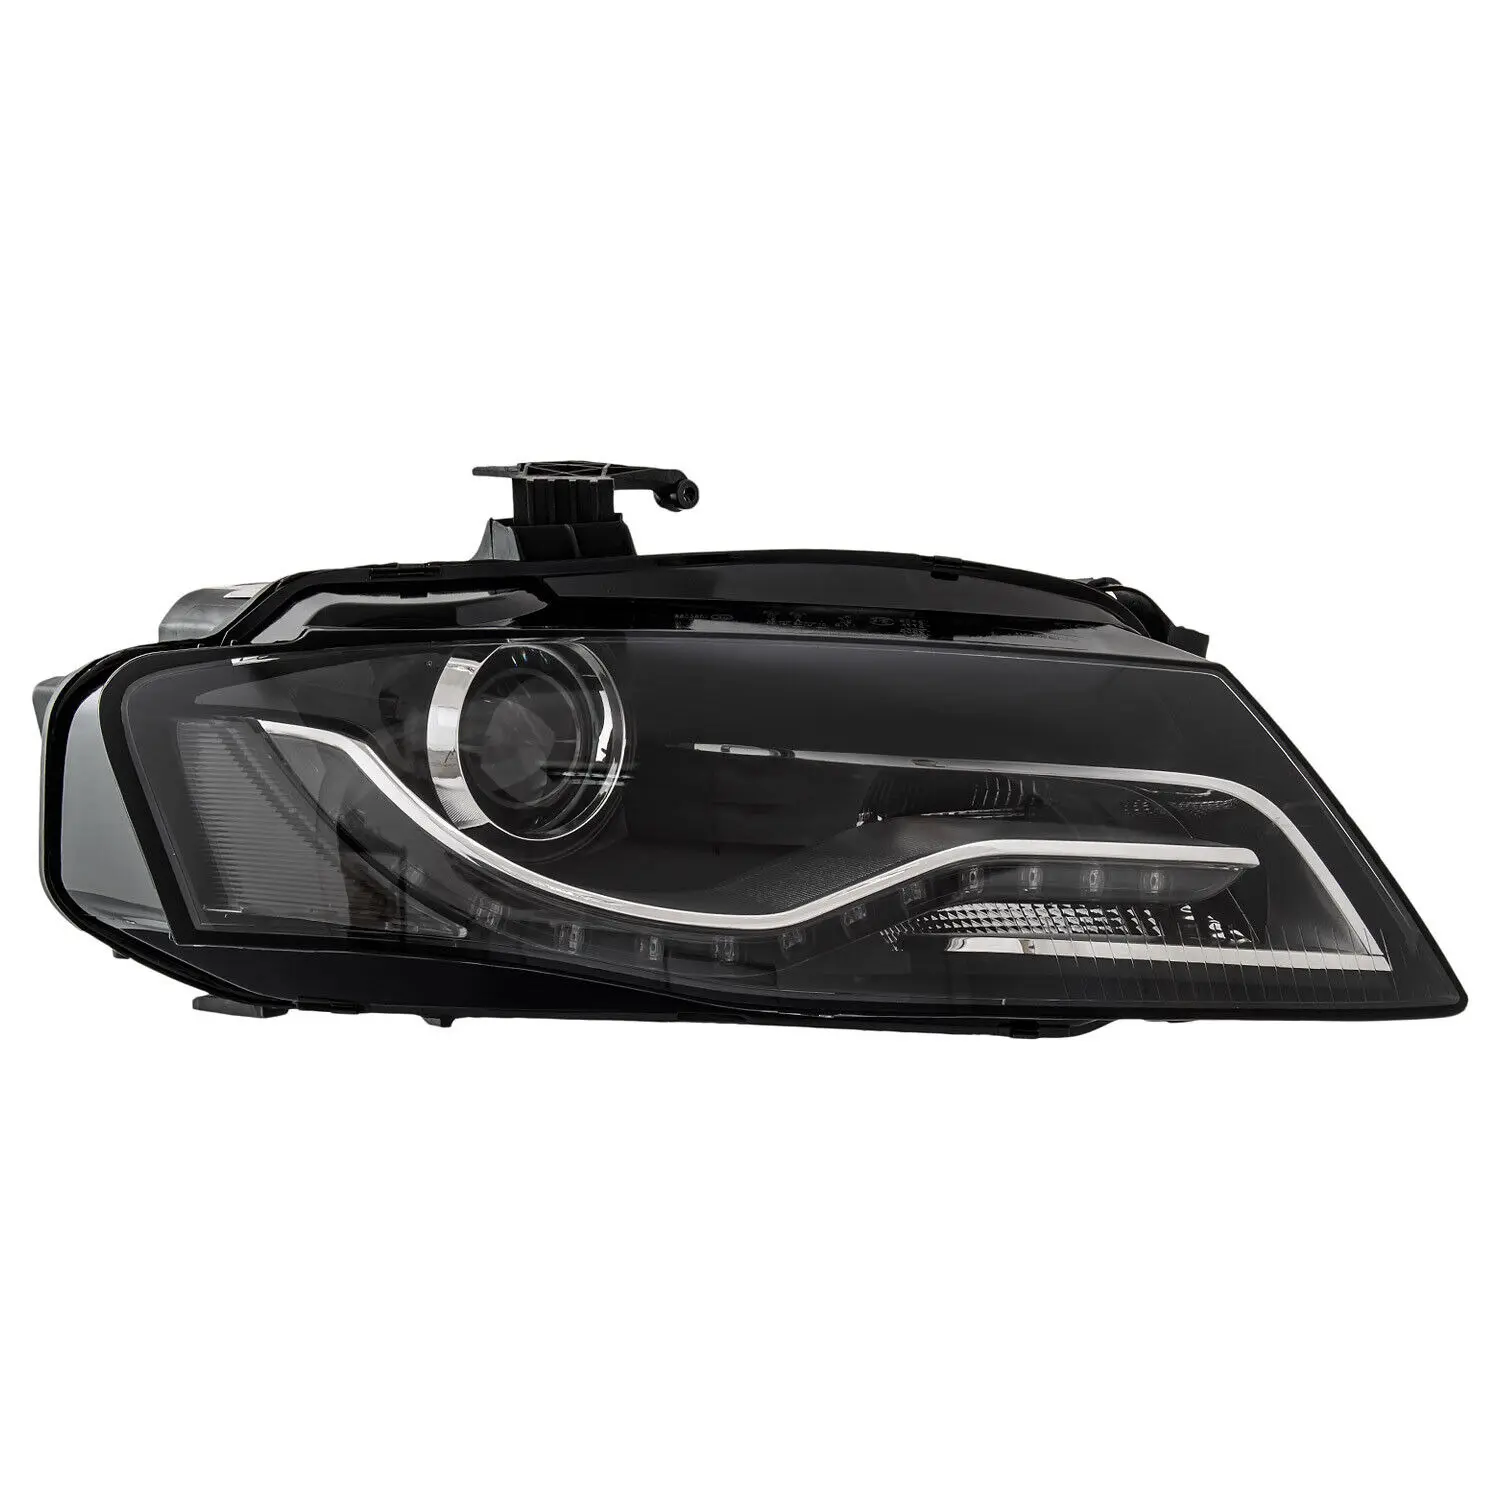 TiBAO E-mark CE Hid Xenon Headlight Car head light lamp for Audi A4 B8 A6 C7 8K0941030C 8K0941030AJ